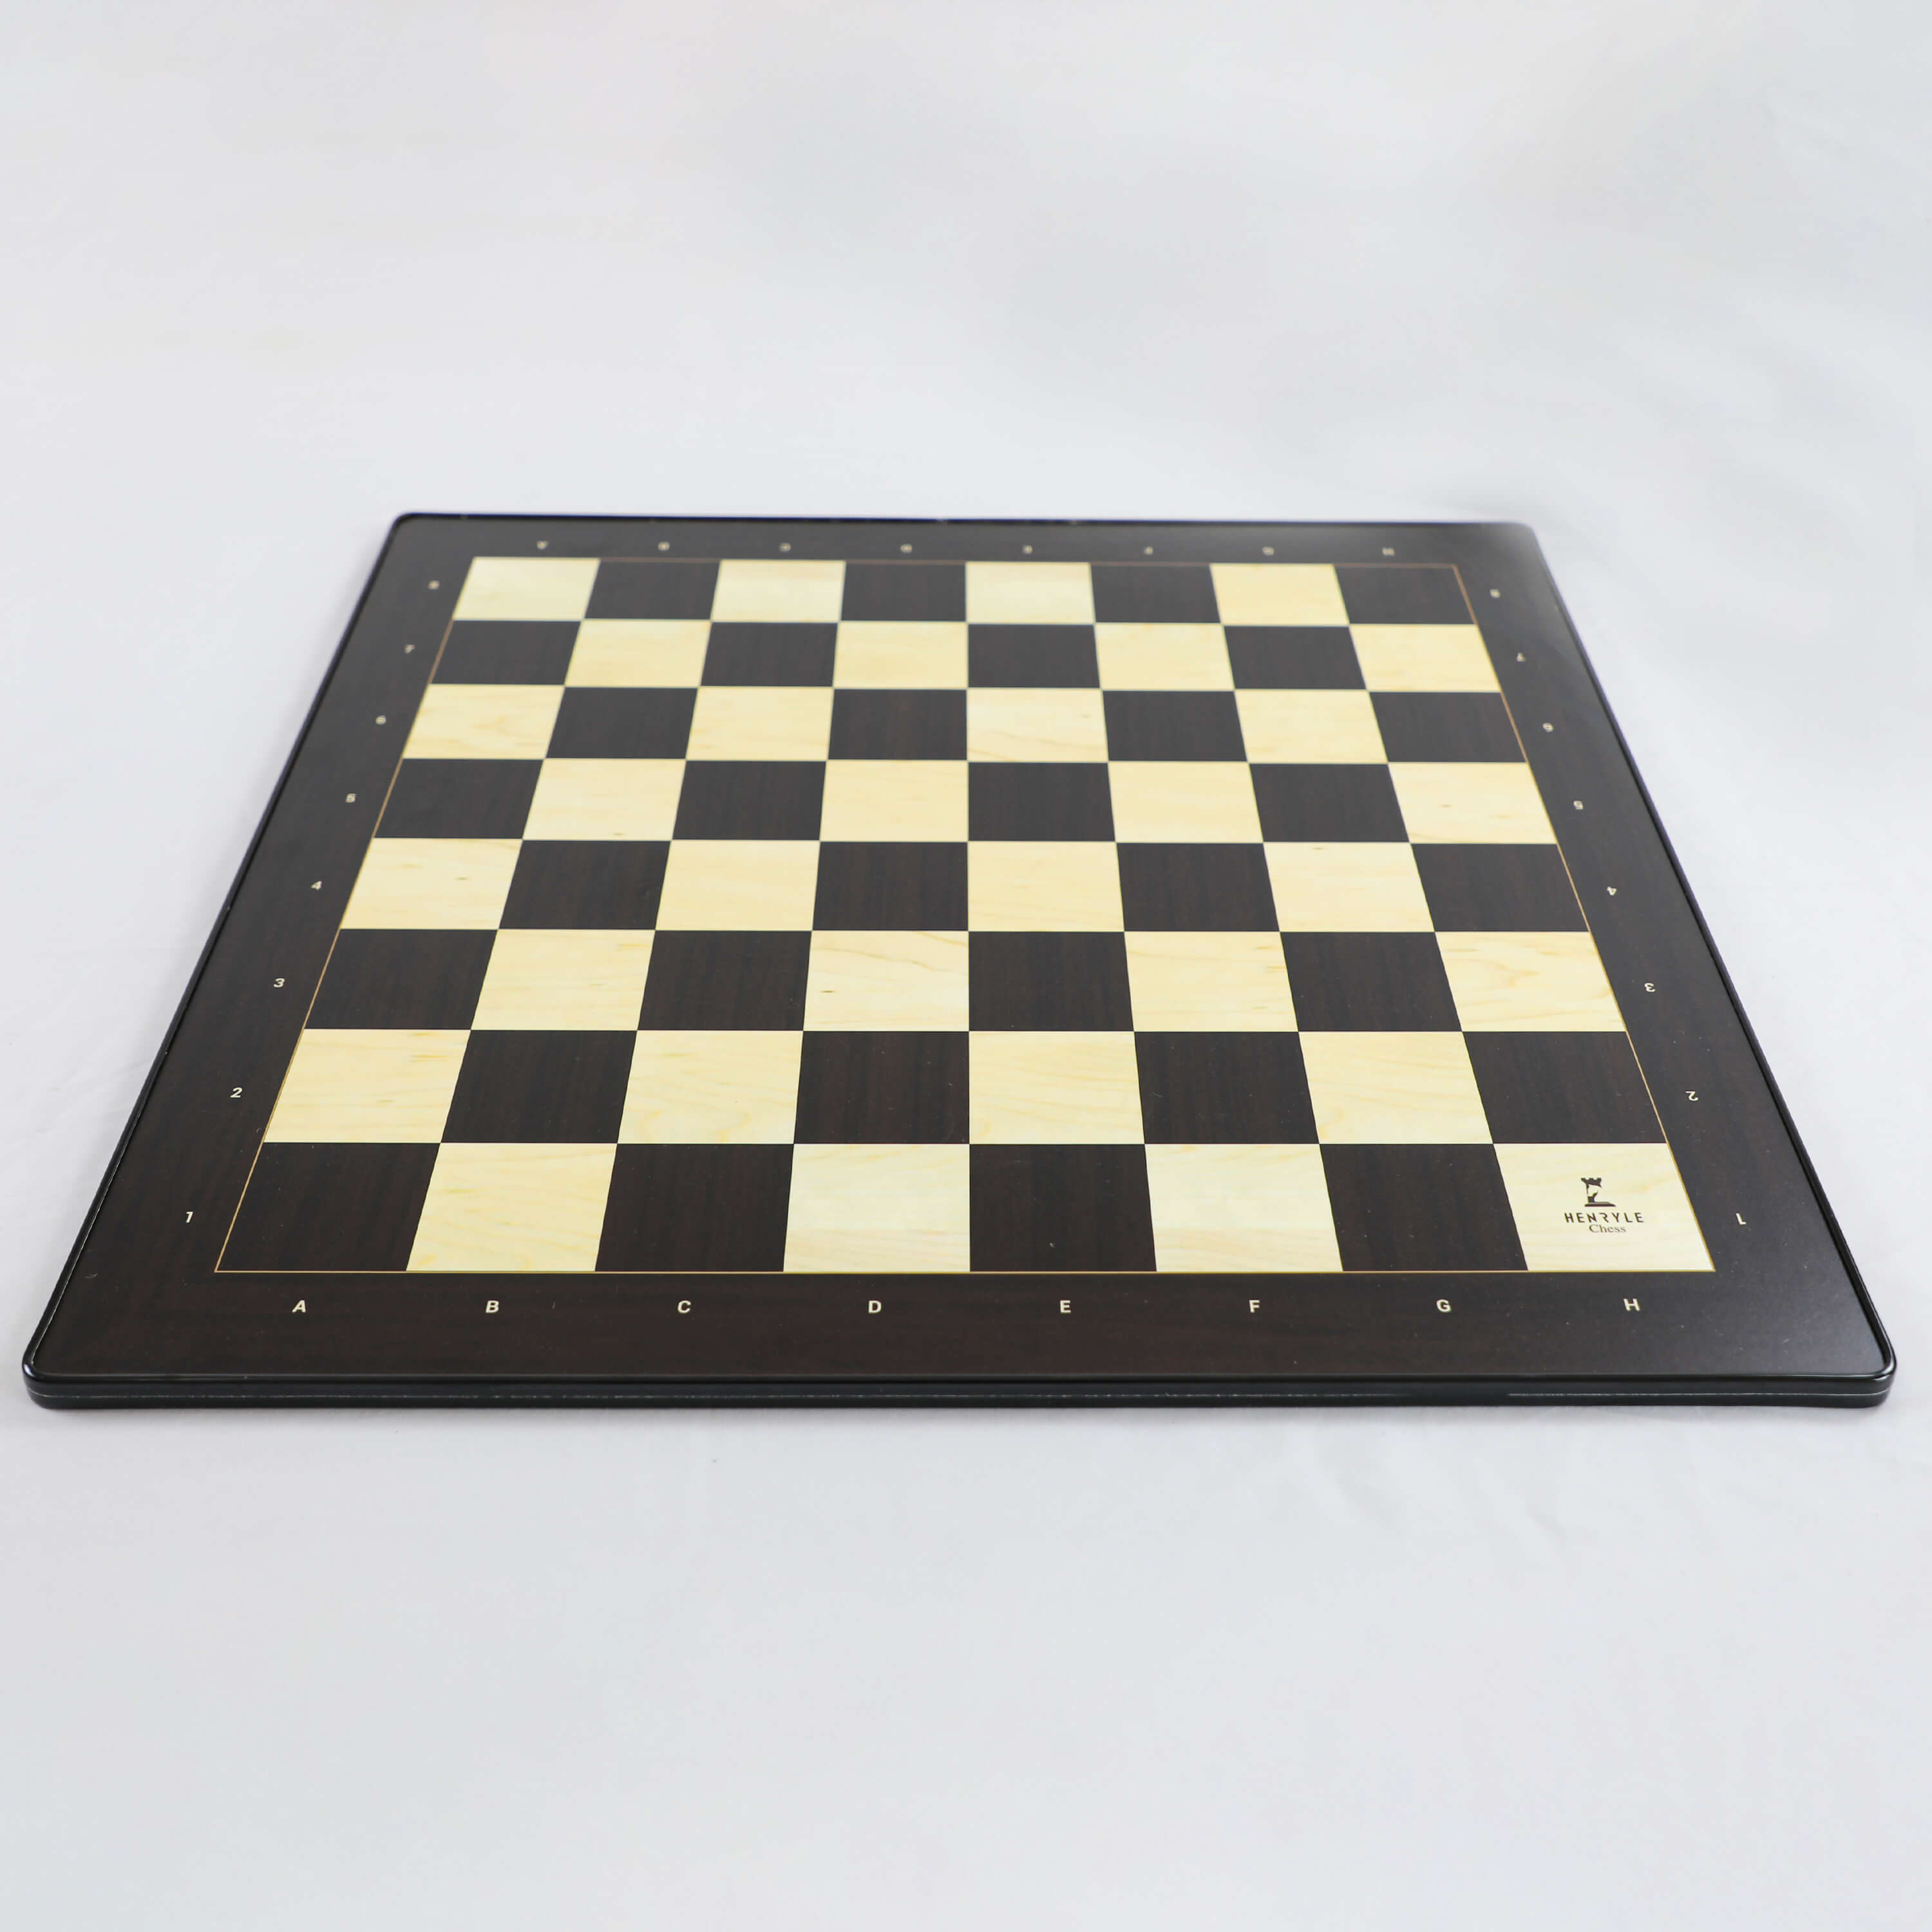 Standard Flat Tournament Chess Board - Black Color (FIDE)